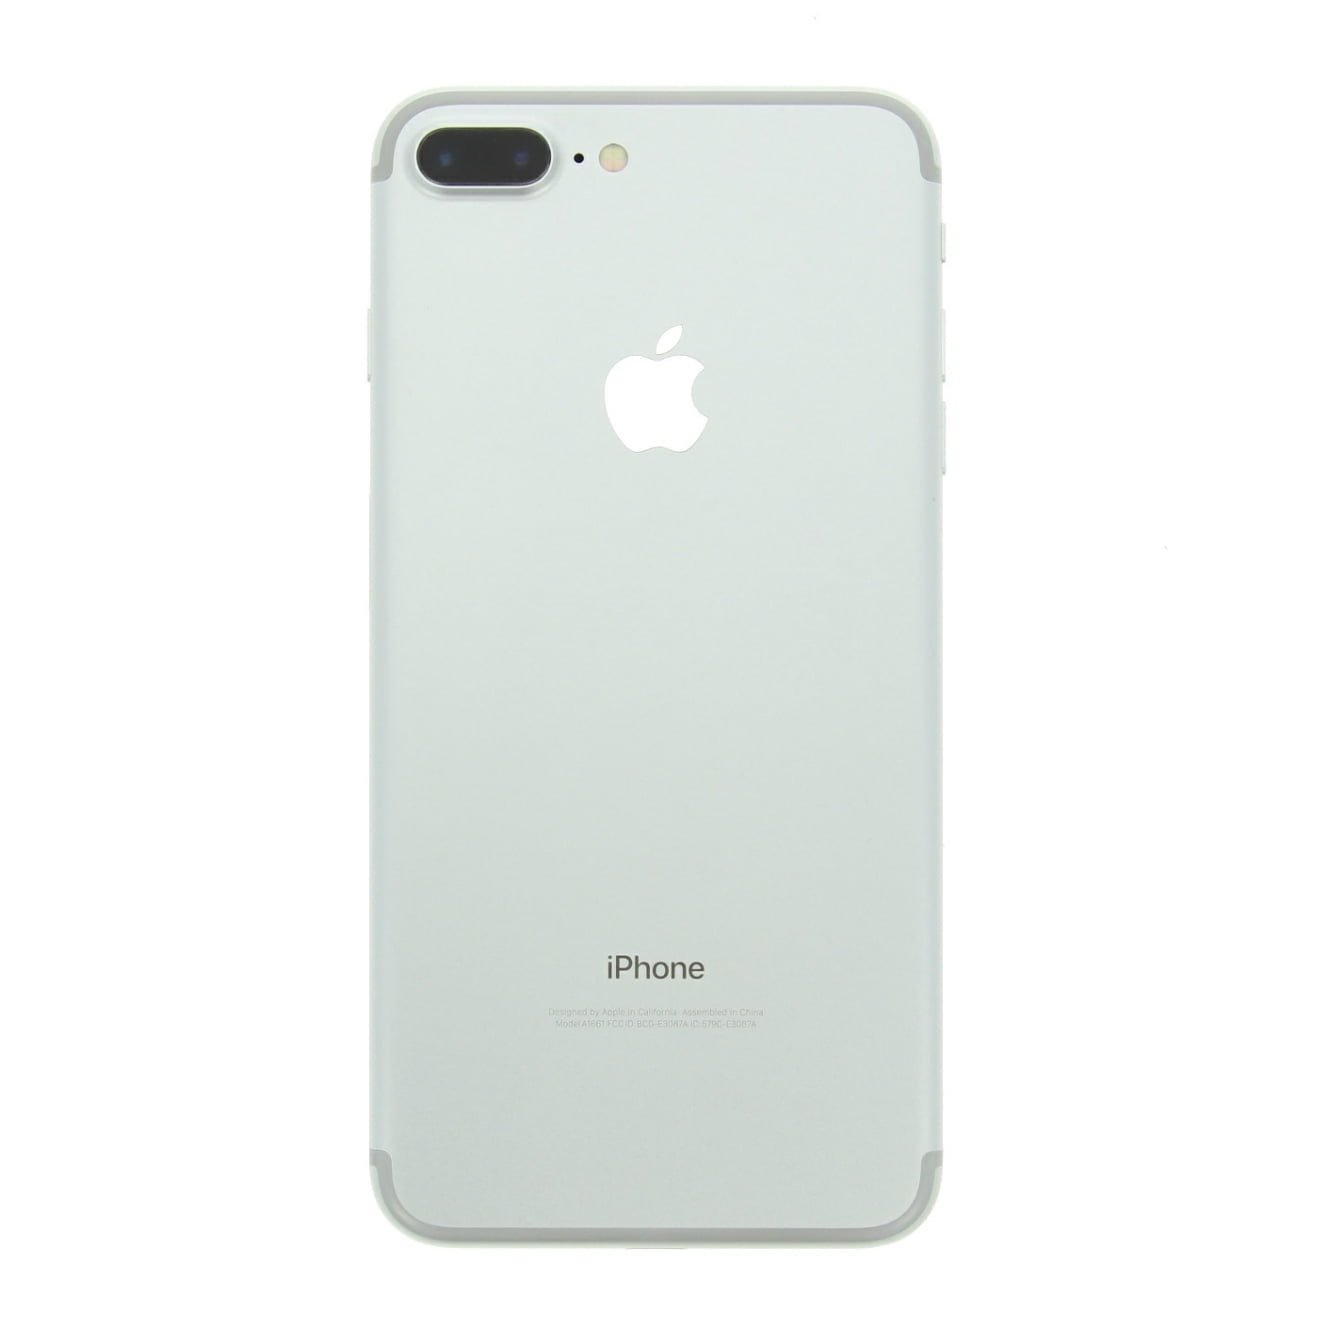 Iphone model a1661 fcc id bcg-e3087a price - lovelyjuja